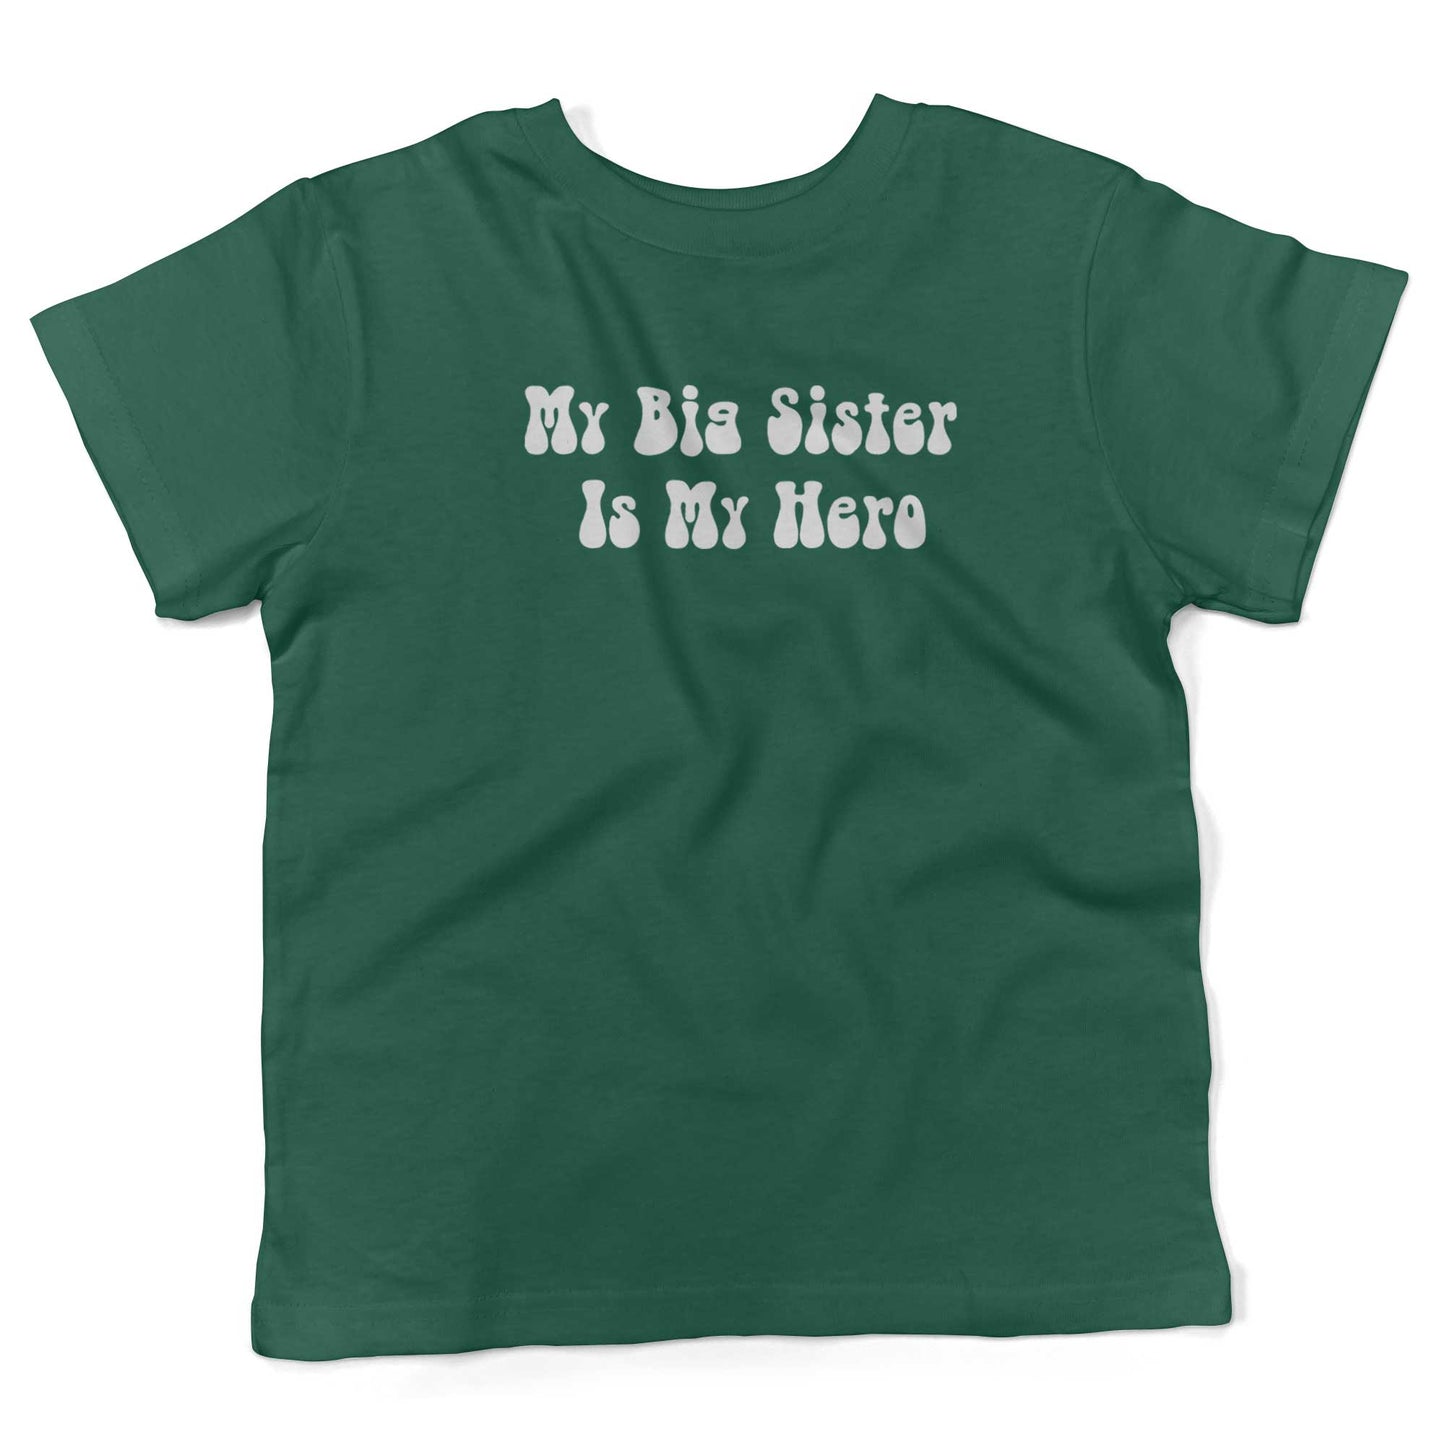 My Big Sister Is My Hero Toddler Shirt-Kelly Green-2T